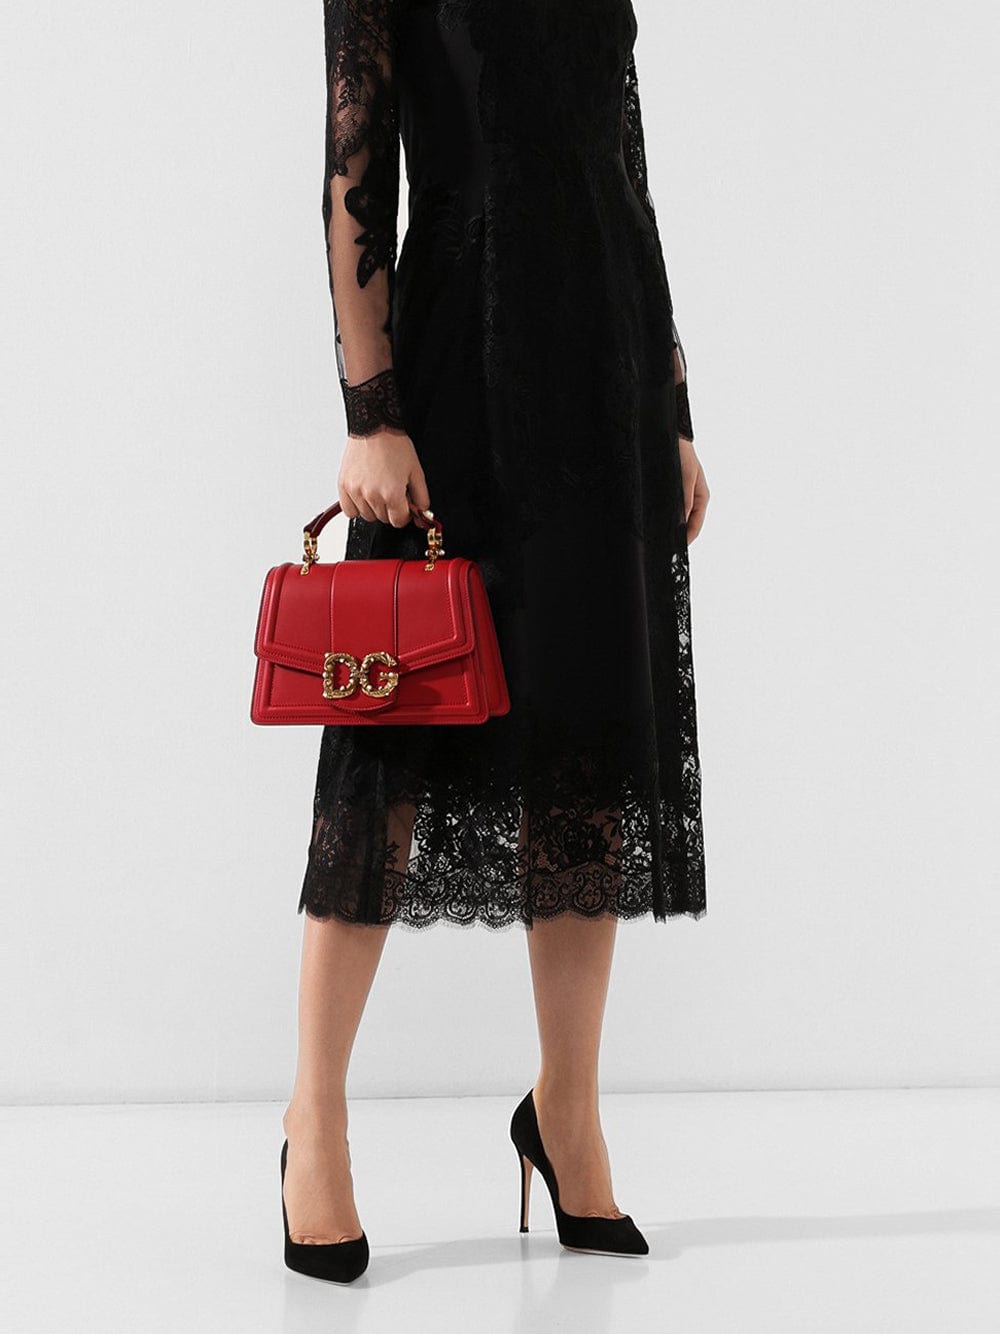 Dolce & Gabbana DG Amore Mini Bag